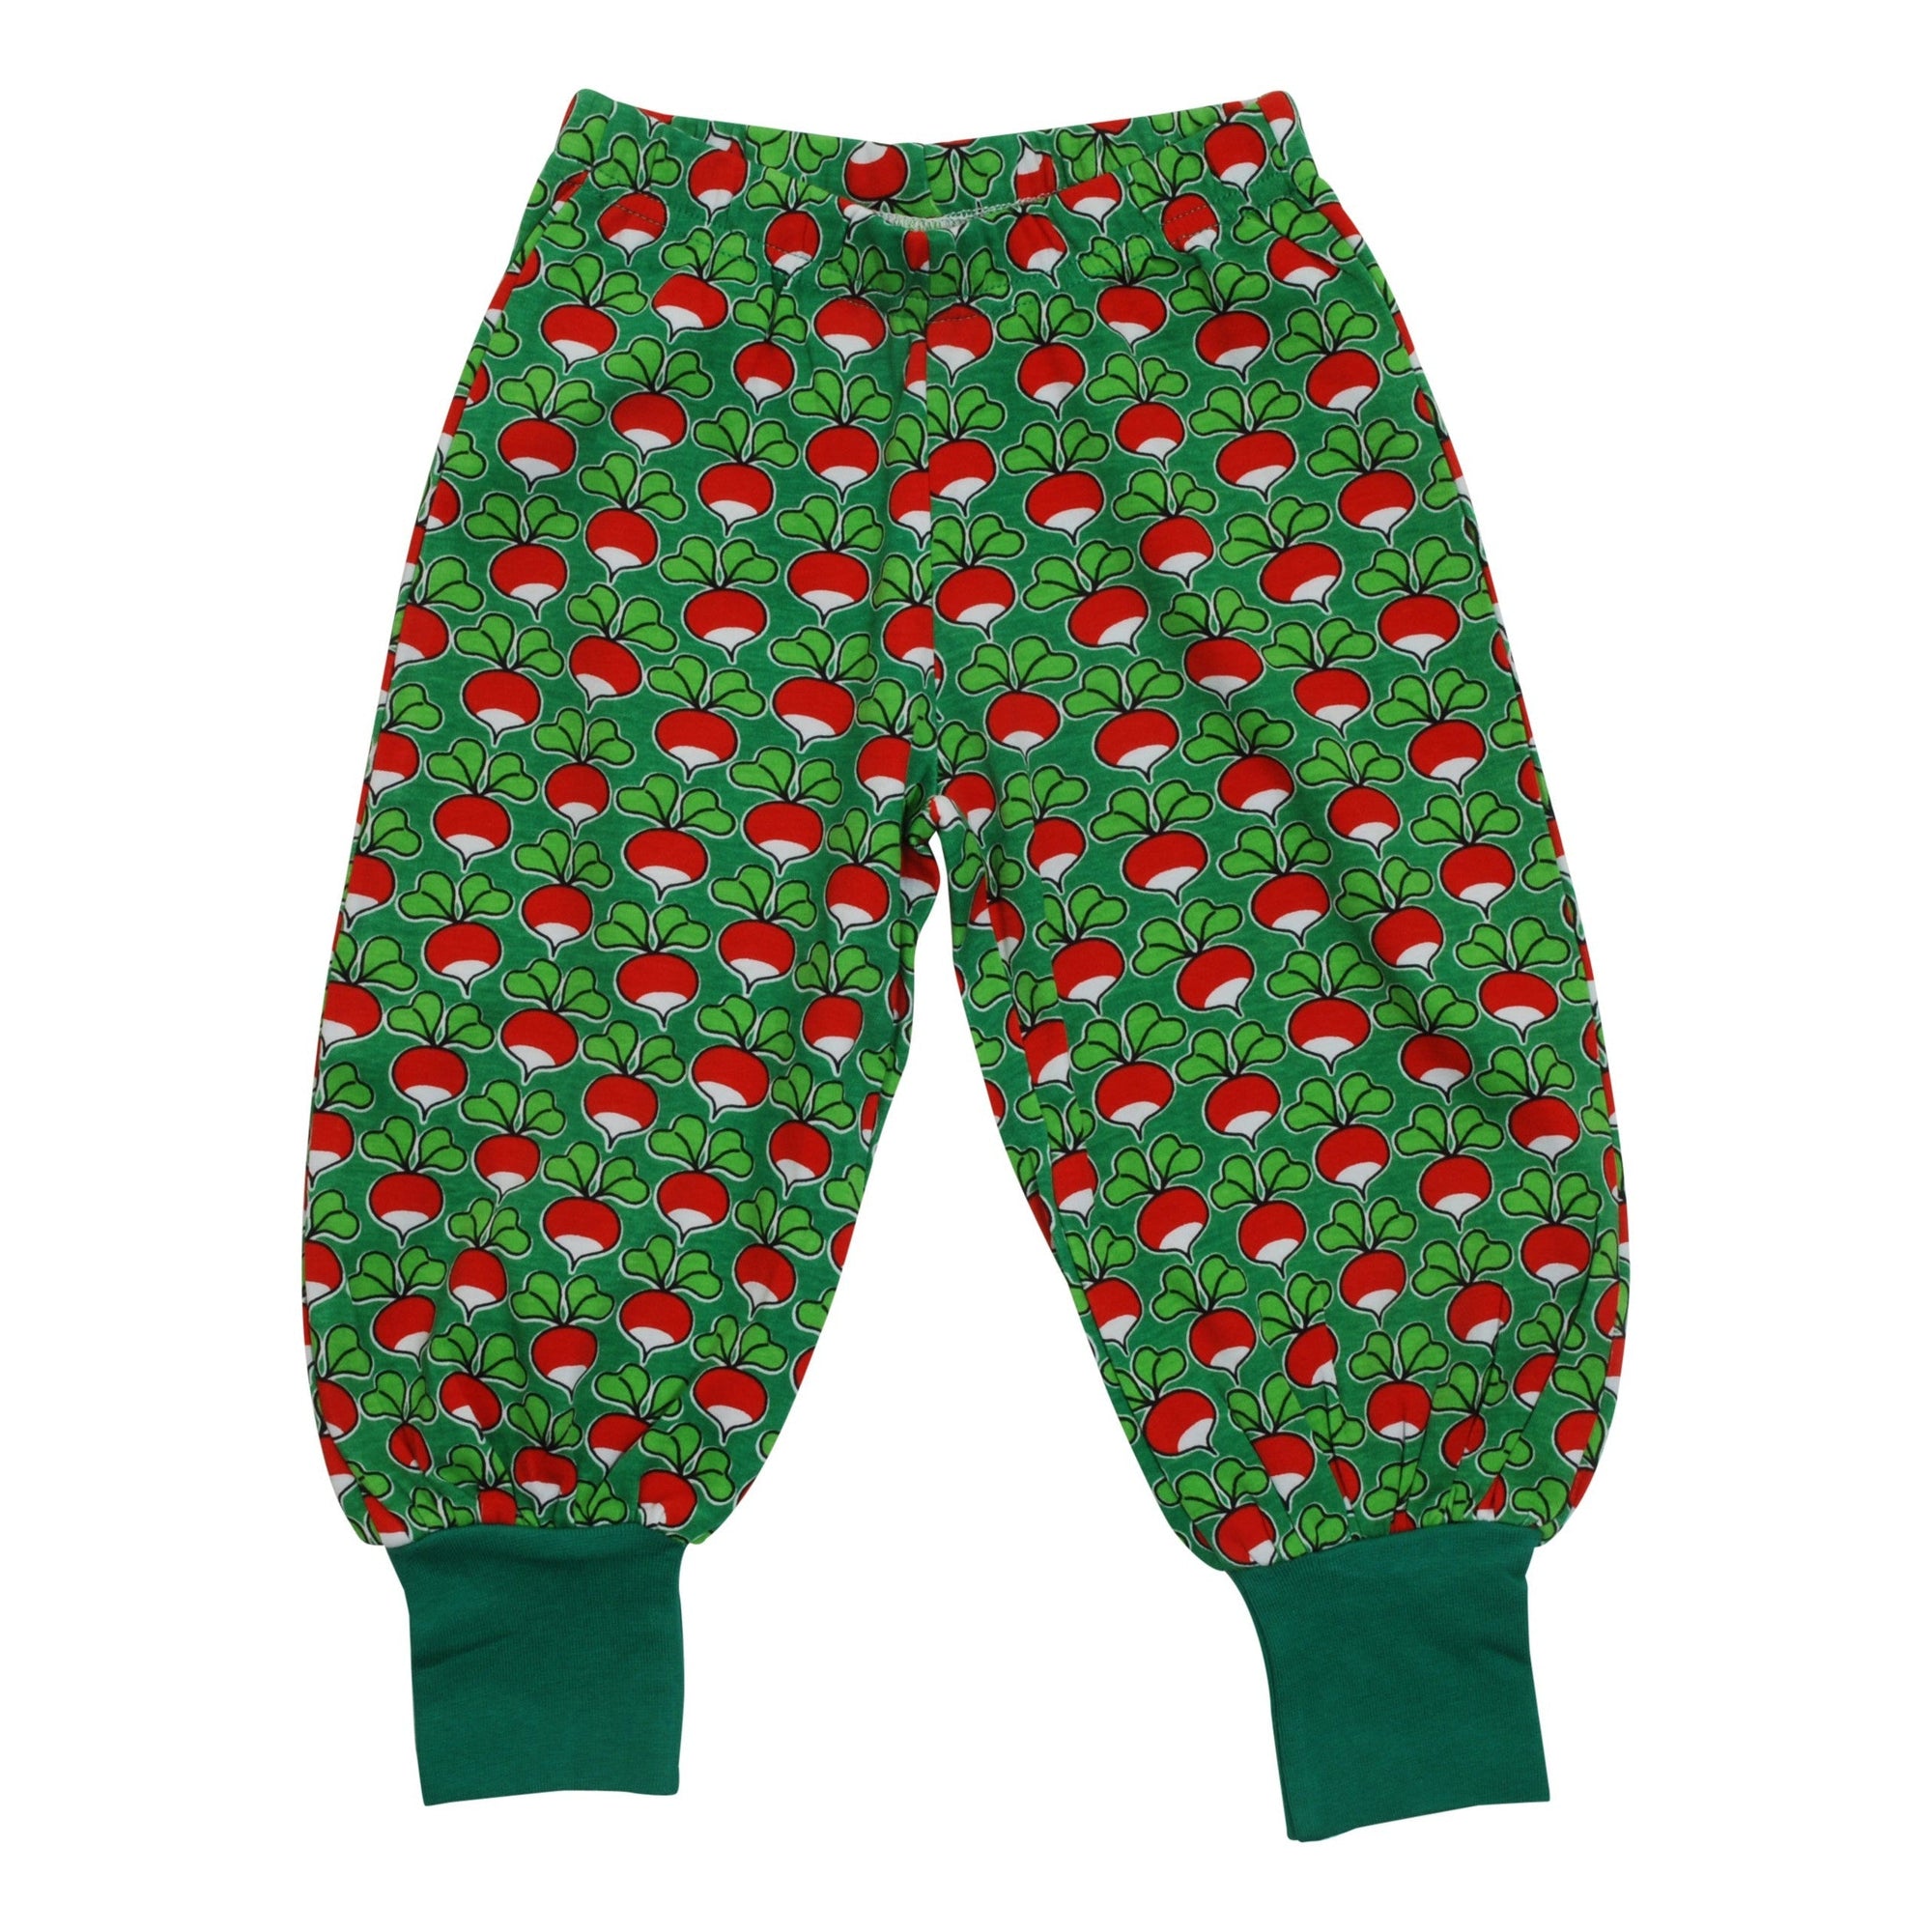 Radish - Cadmium Green Baggy Pants - 2 Left Size 1-2 & 2-4 years-Duns Sweden-Modern Rascals